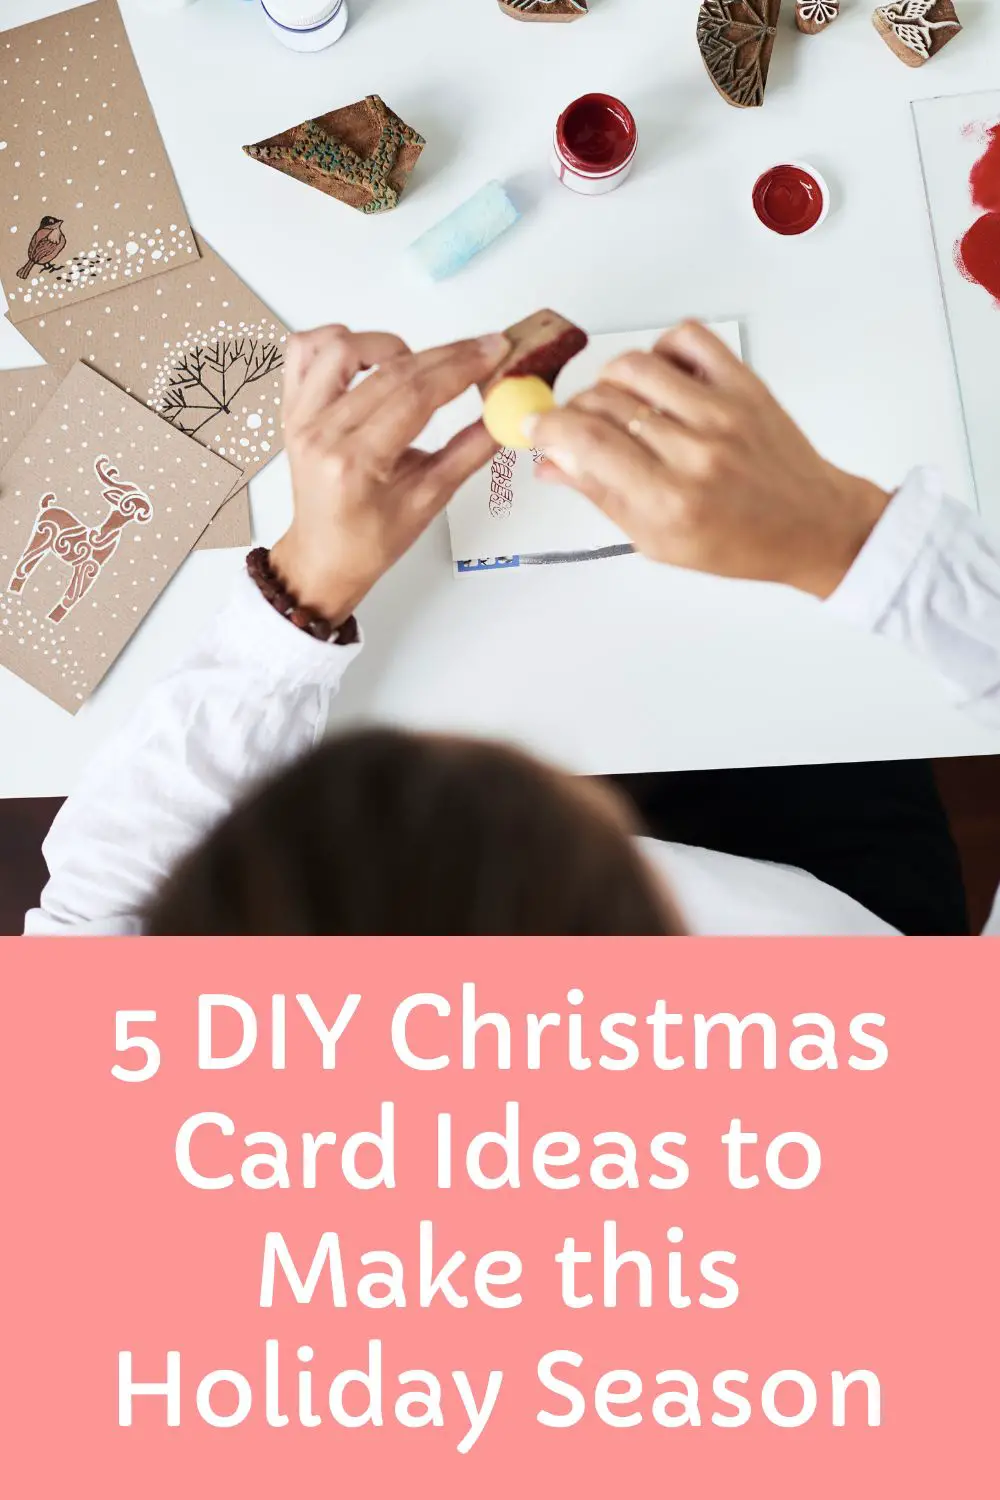 5 DIY Christmas Card Ideas to Make this Holiday Season